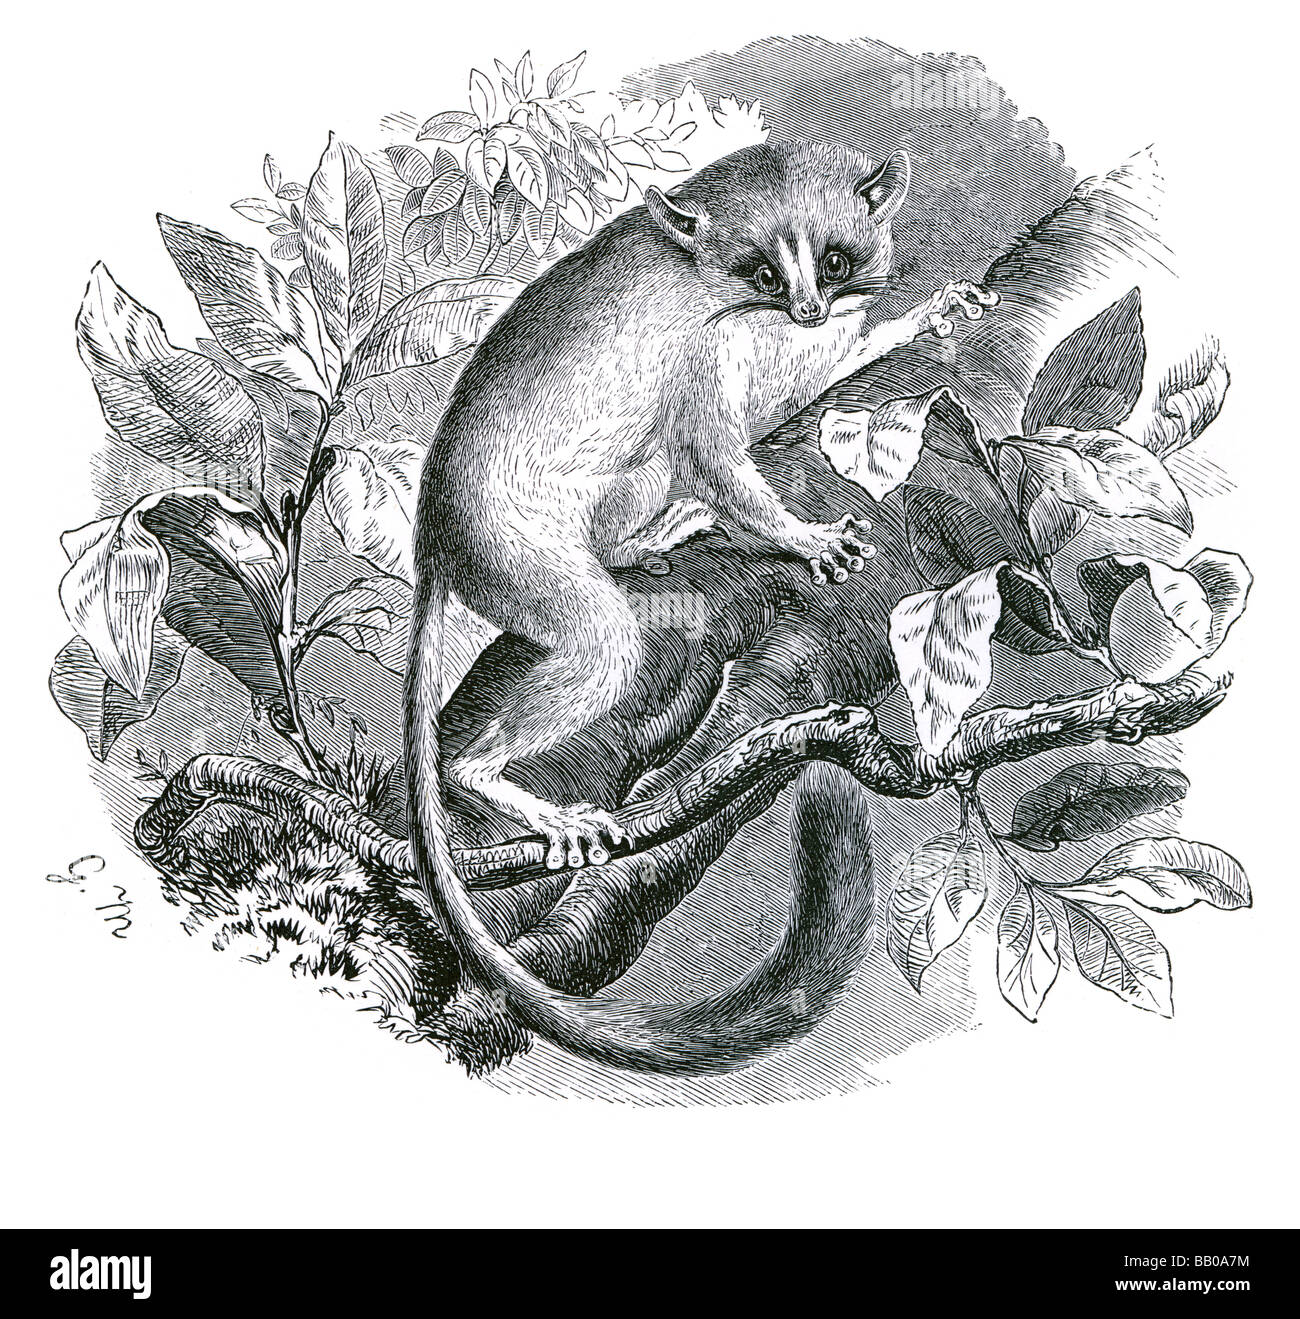 Il mouse murino lemur Lemuridae Lemuriformes primate strepsirrhines lemures grida di lamento occhi riflettente lemuriform catta flyi Foto Stock